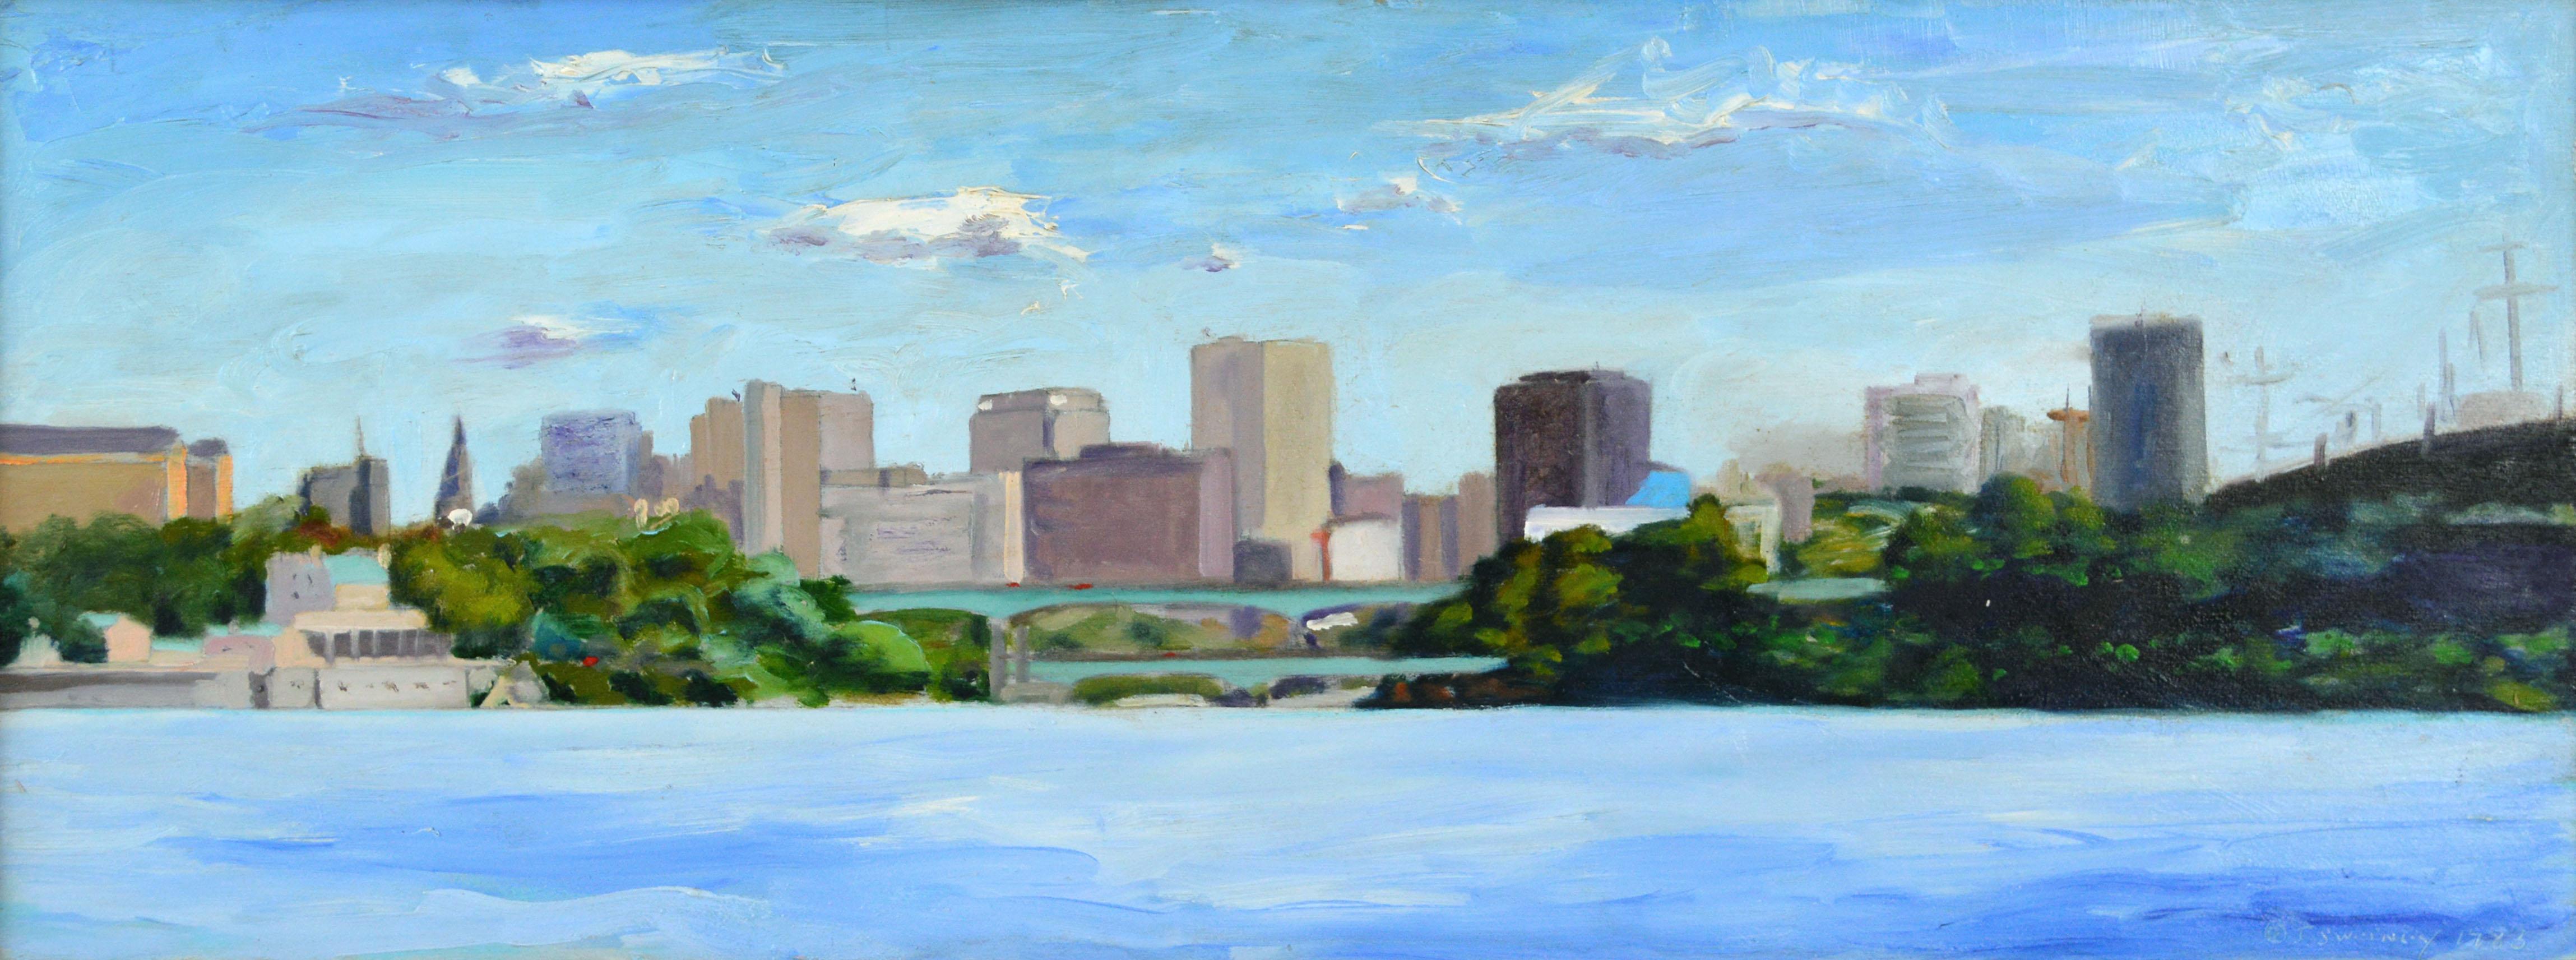 Philadelphia Skyline, Schuylkill River Plein Air Urban Landscape Panorama  - Painting by Joseph Sweeney 